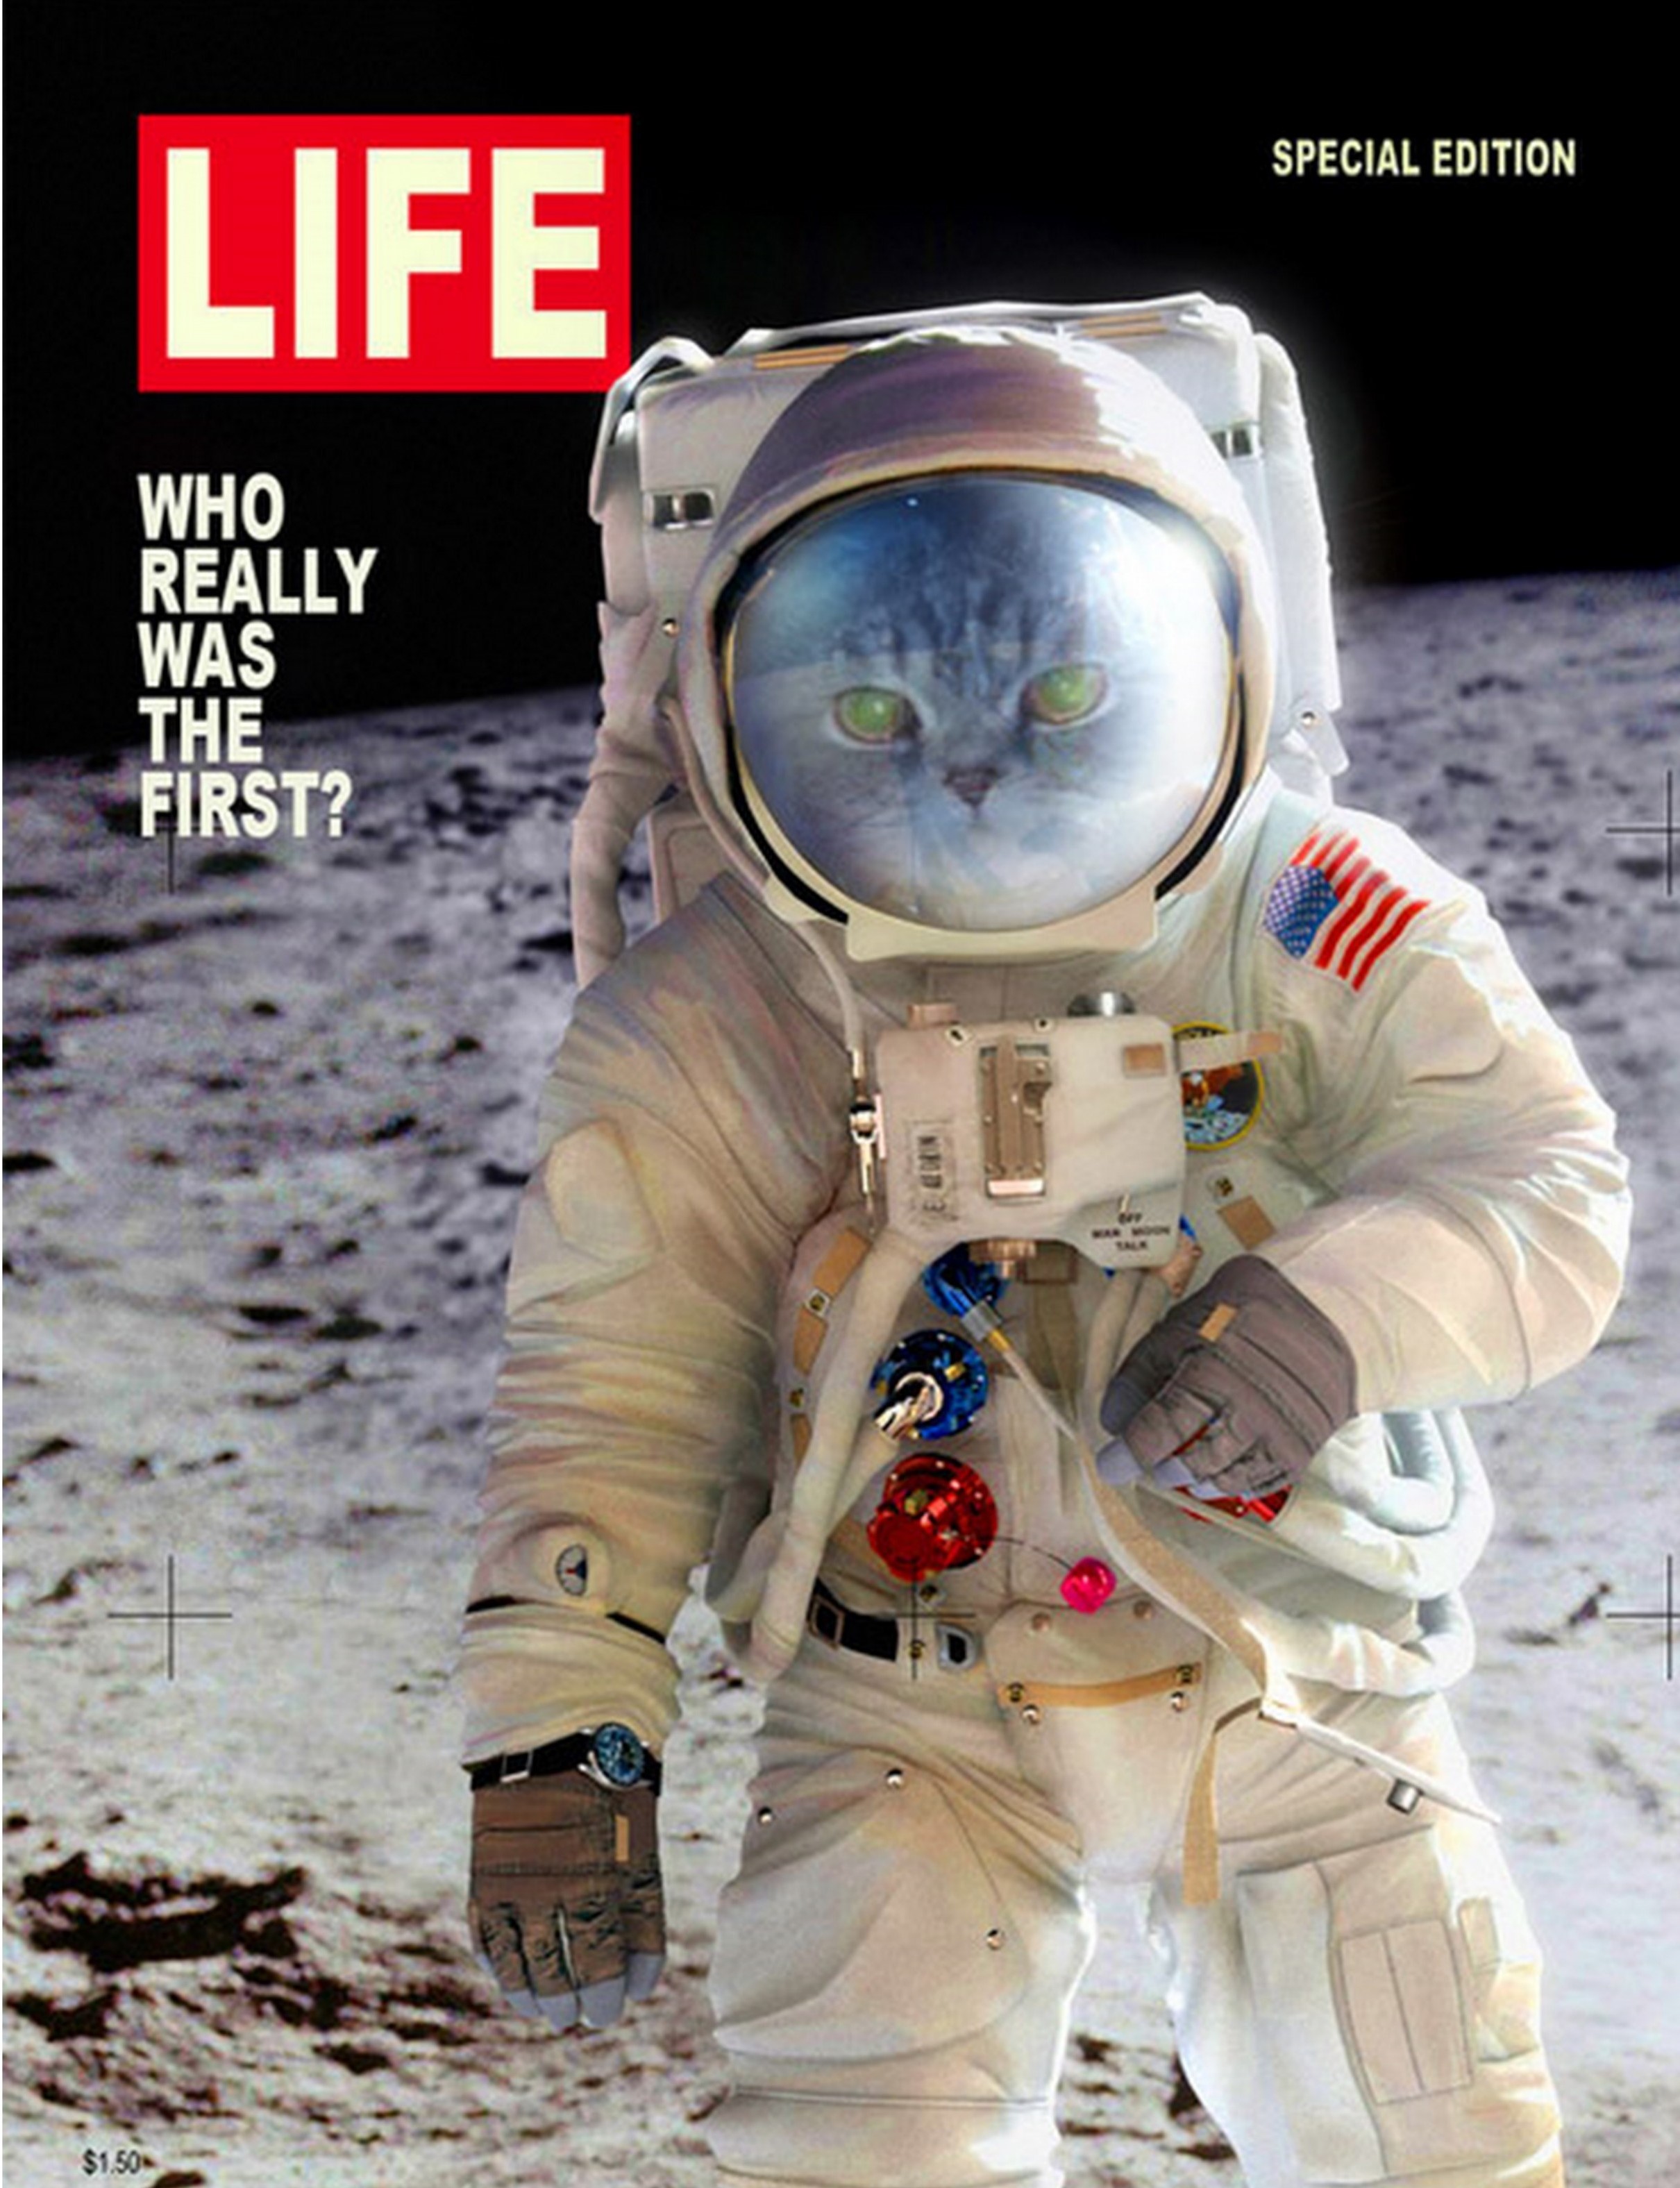 Man landed on the moon. Космонавт. Космонавт в космосе. Обложки журнала Life. Астронавт в космосе.